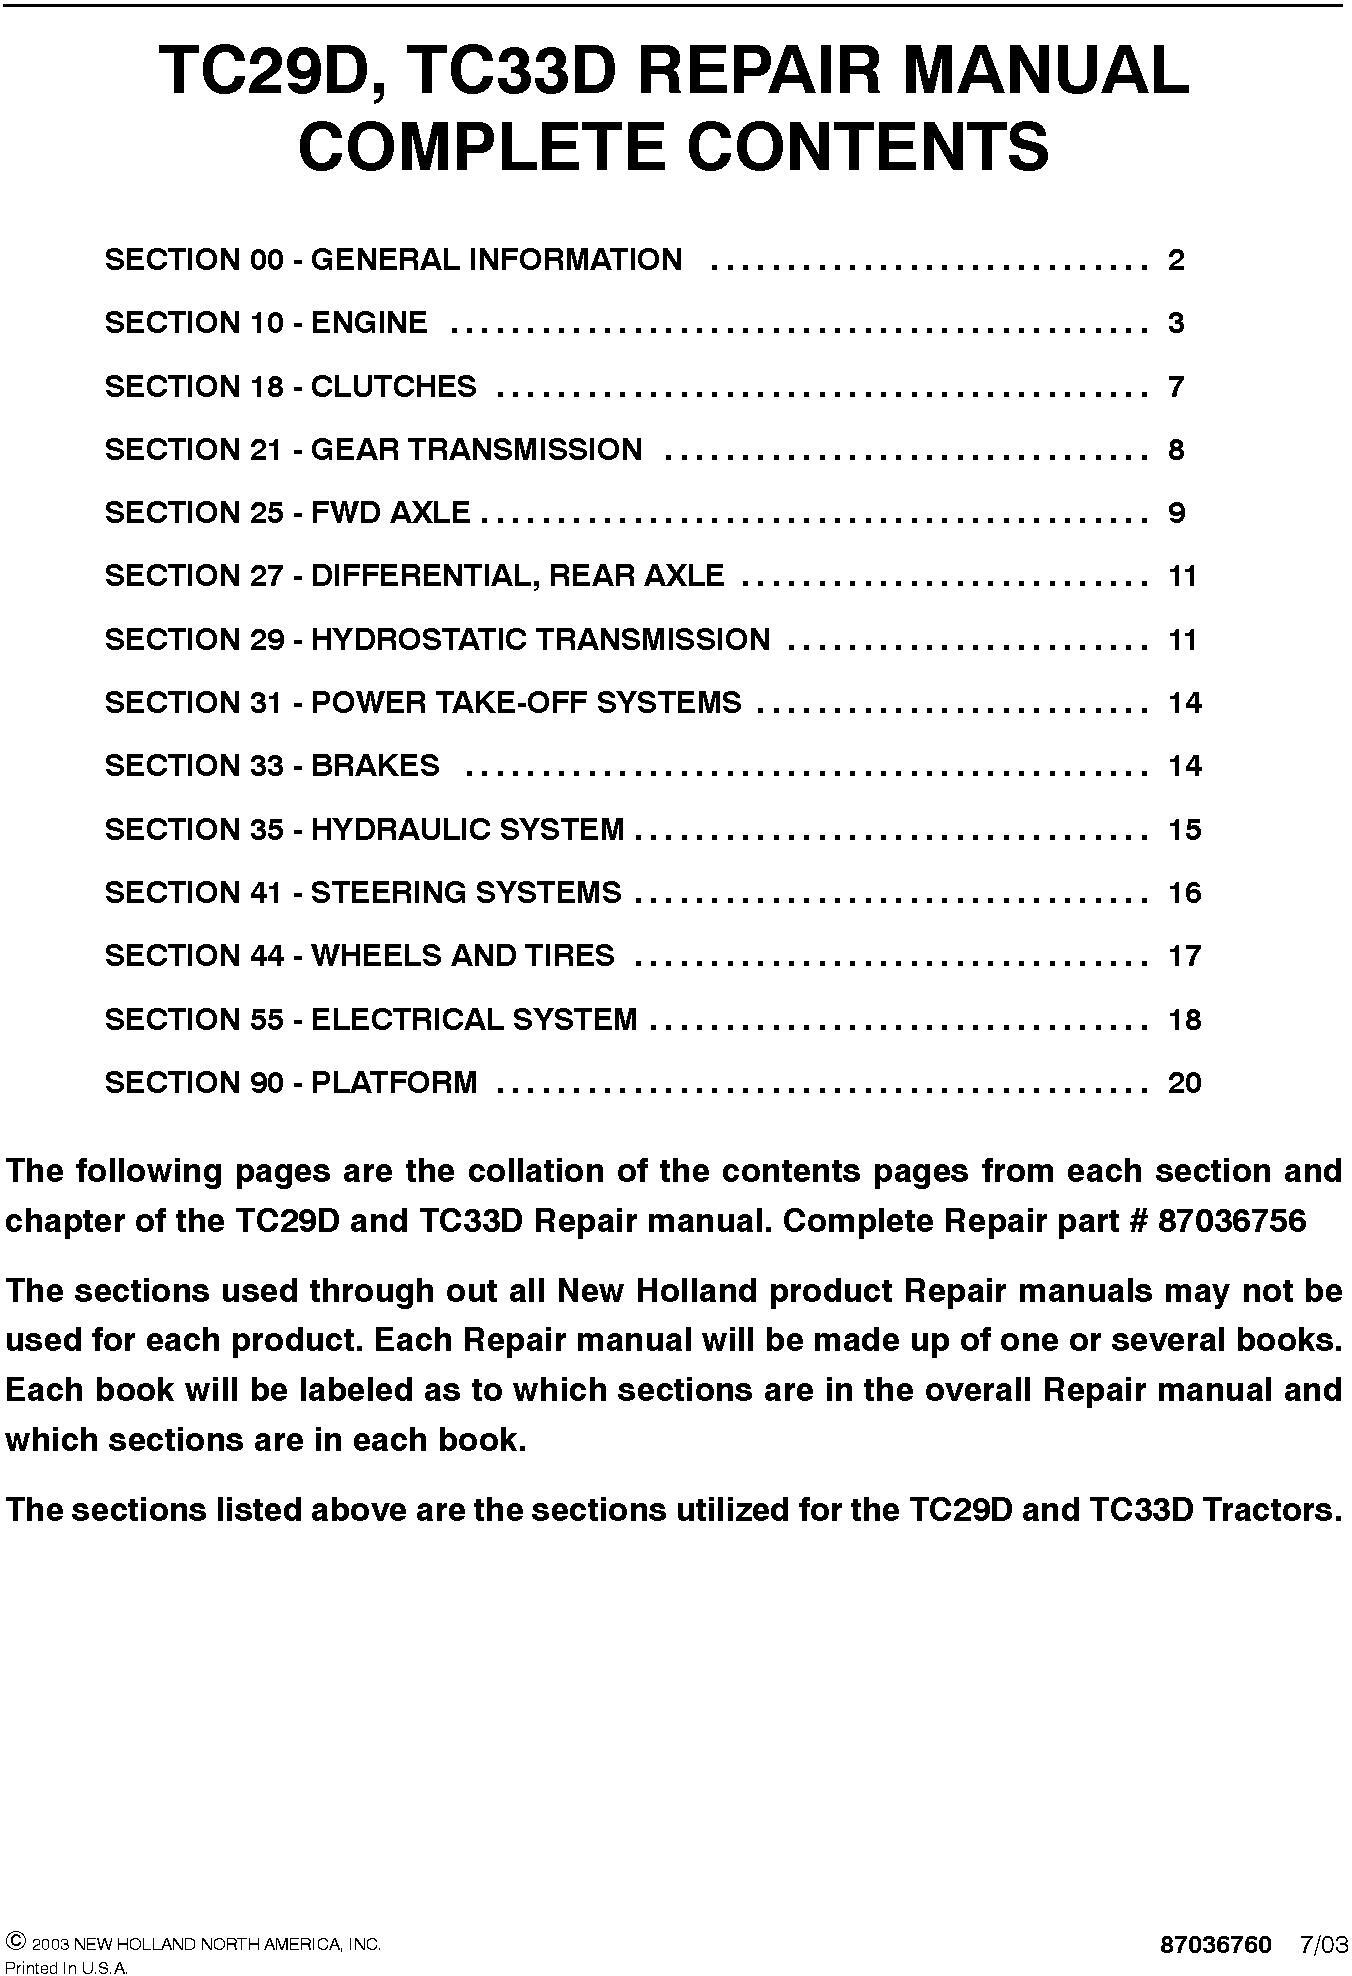 New Holland TC29D, TC33D Tractor Complete Service Manual - 19600